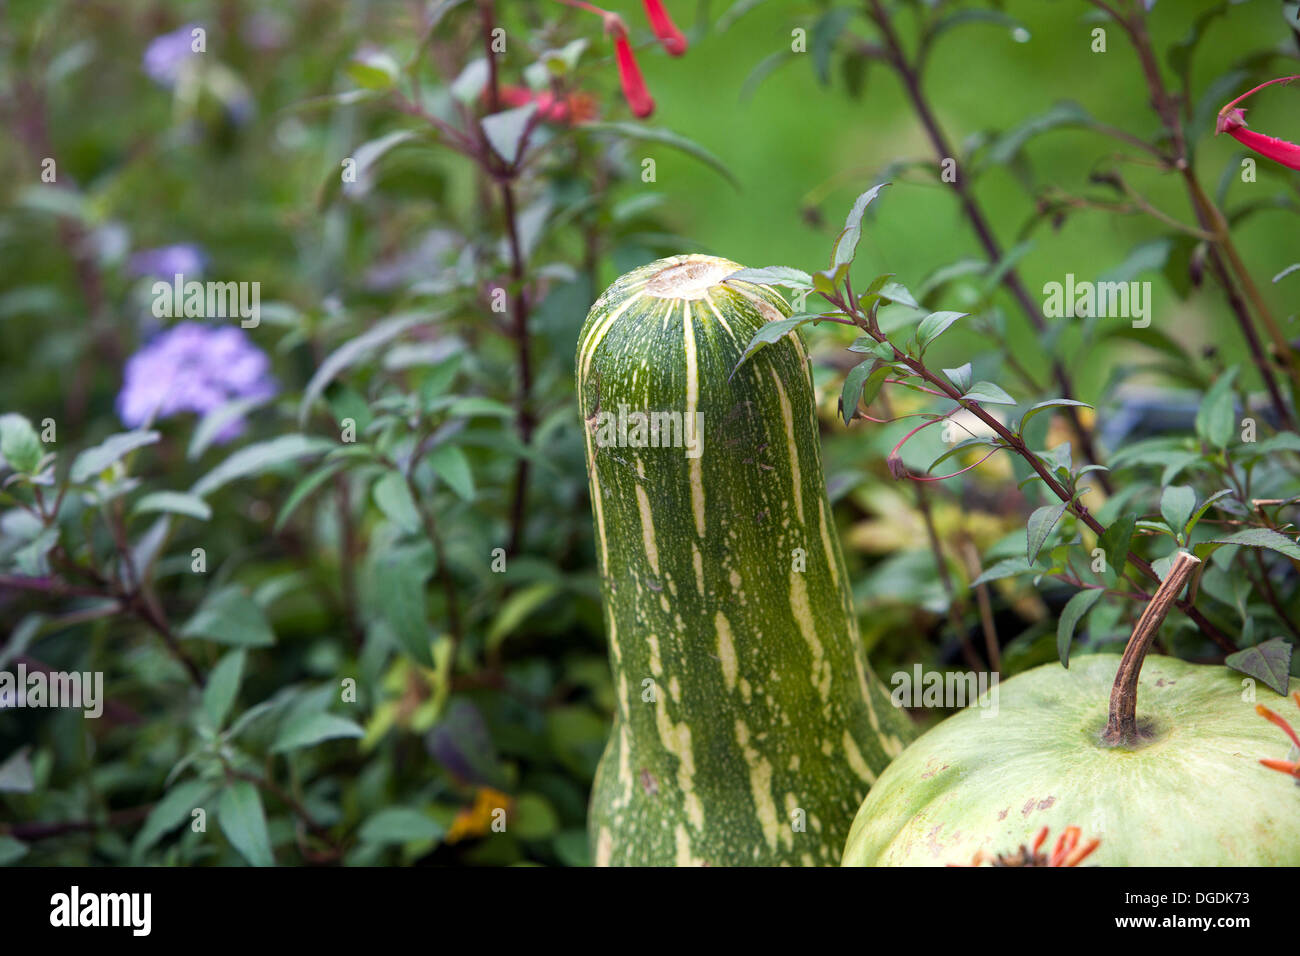 Autumn gourd in garden pumpkins, squash Cucurbita pepo in garden Stock Photo